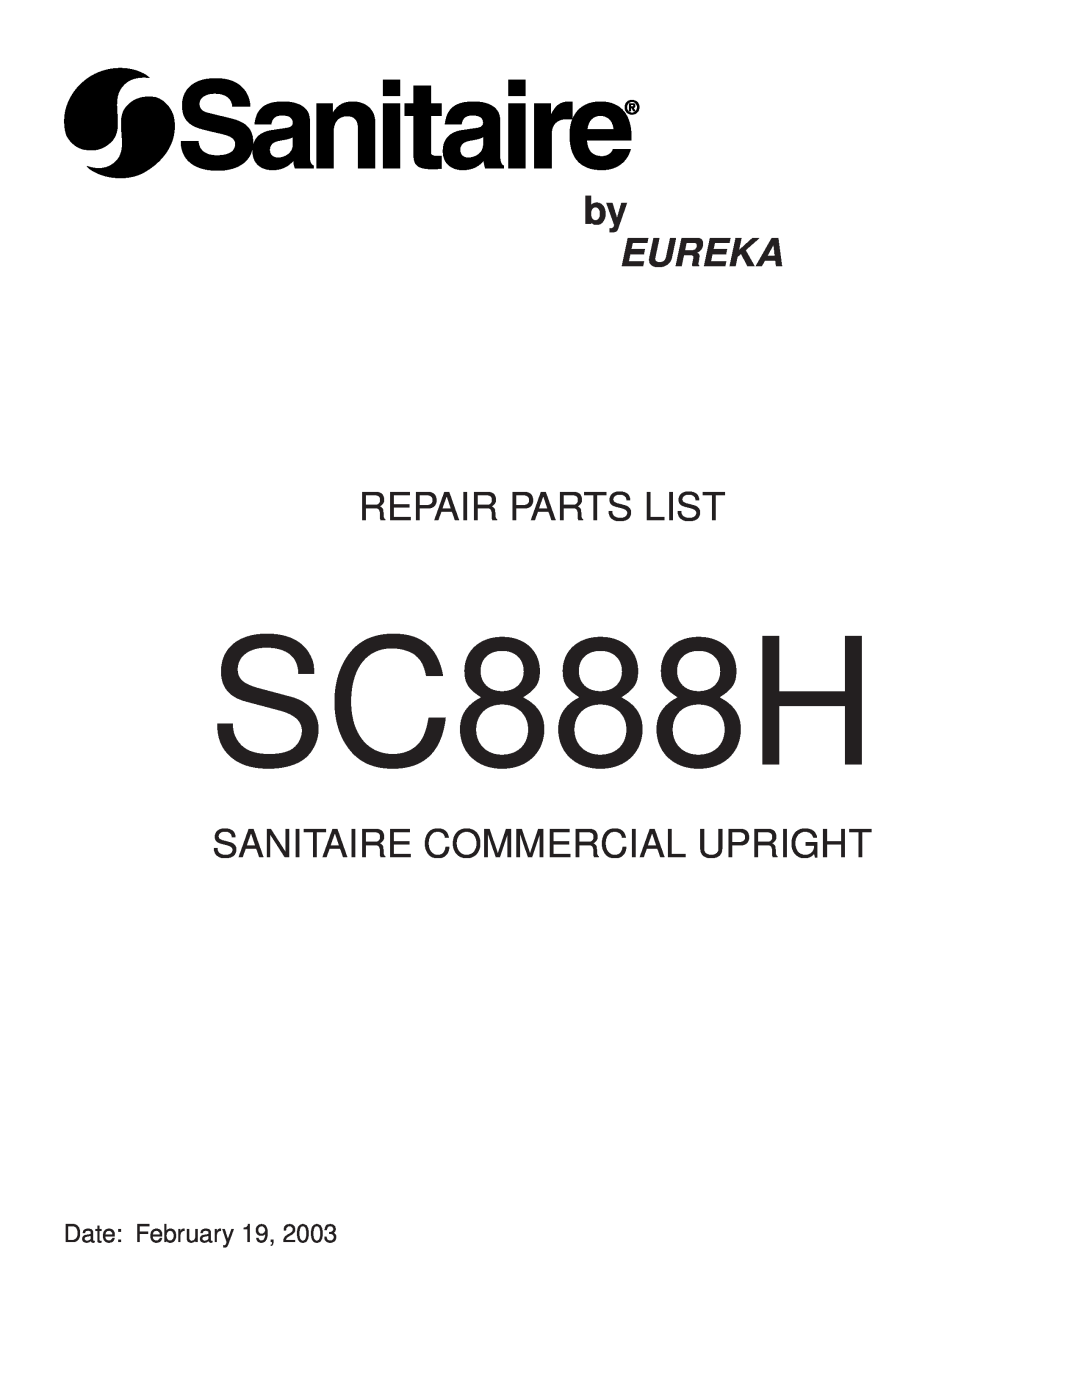 Sanitaire SC888H manual Eureka, Repair Parts List, Sanitaire Commercial Upright, Date: February 19 